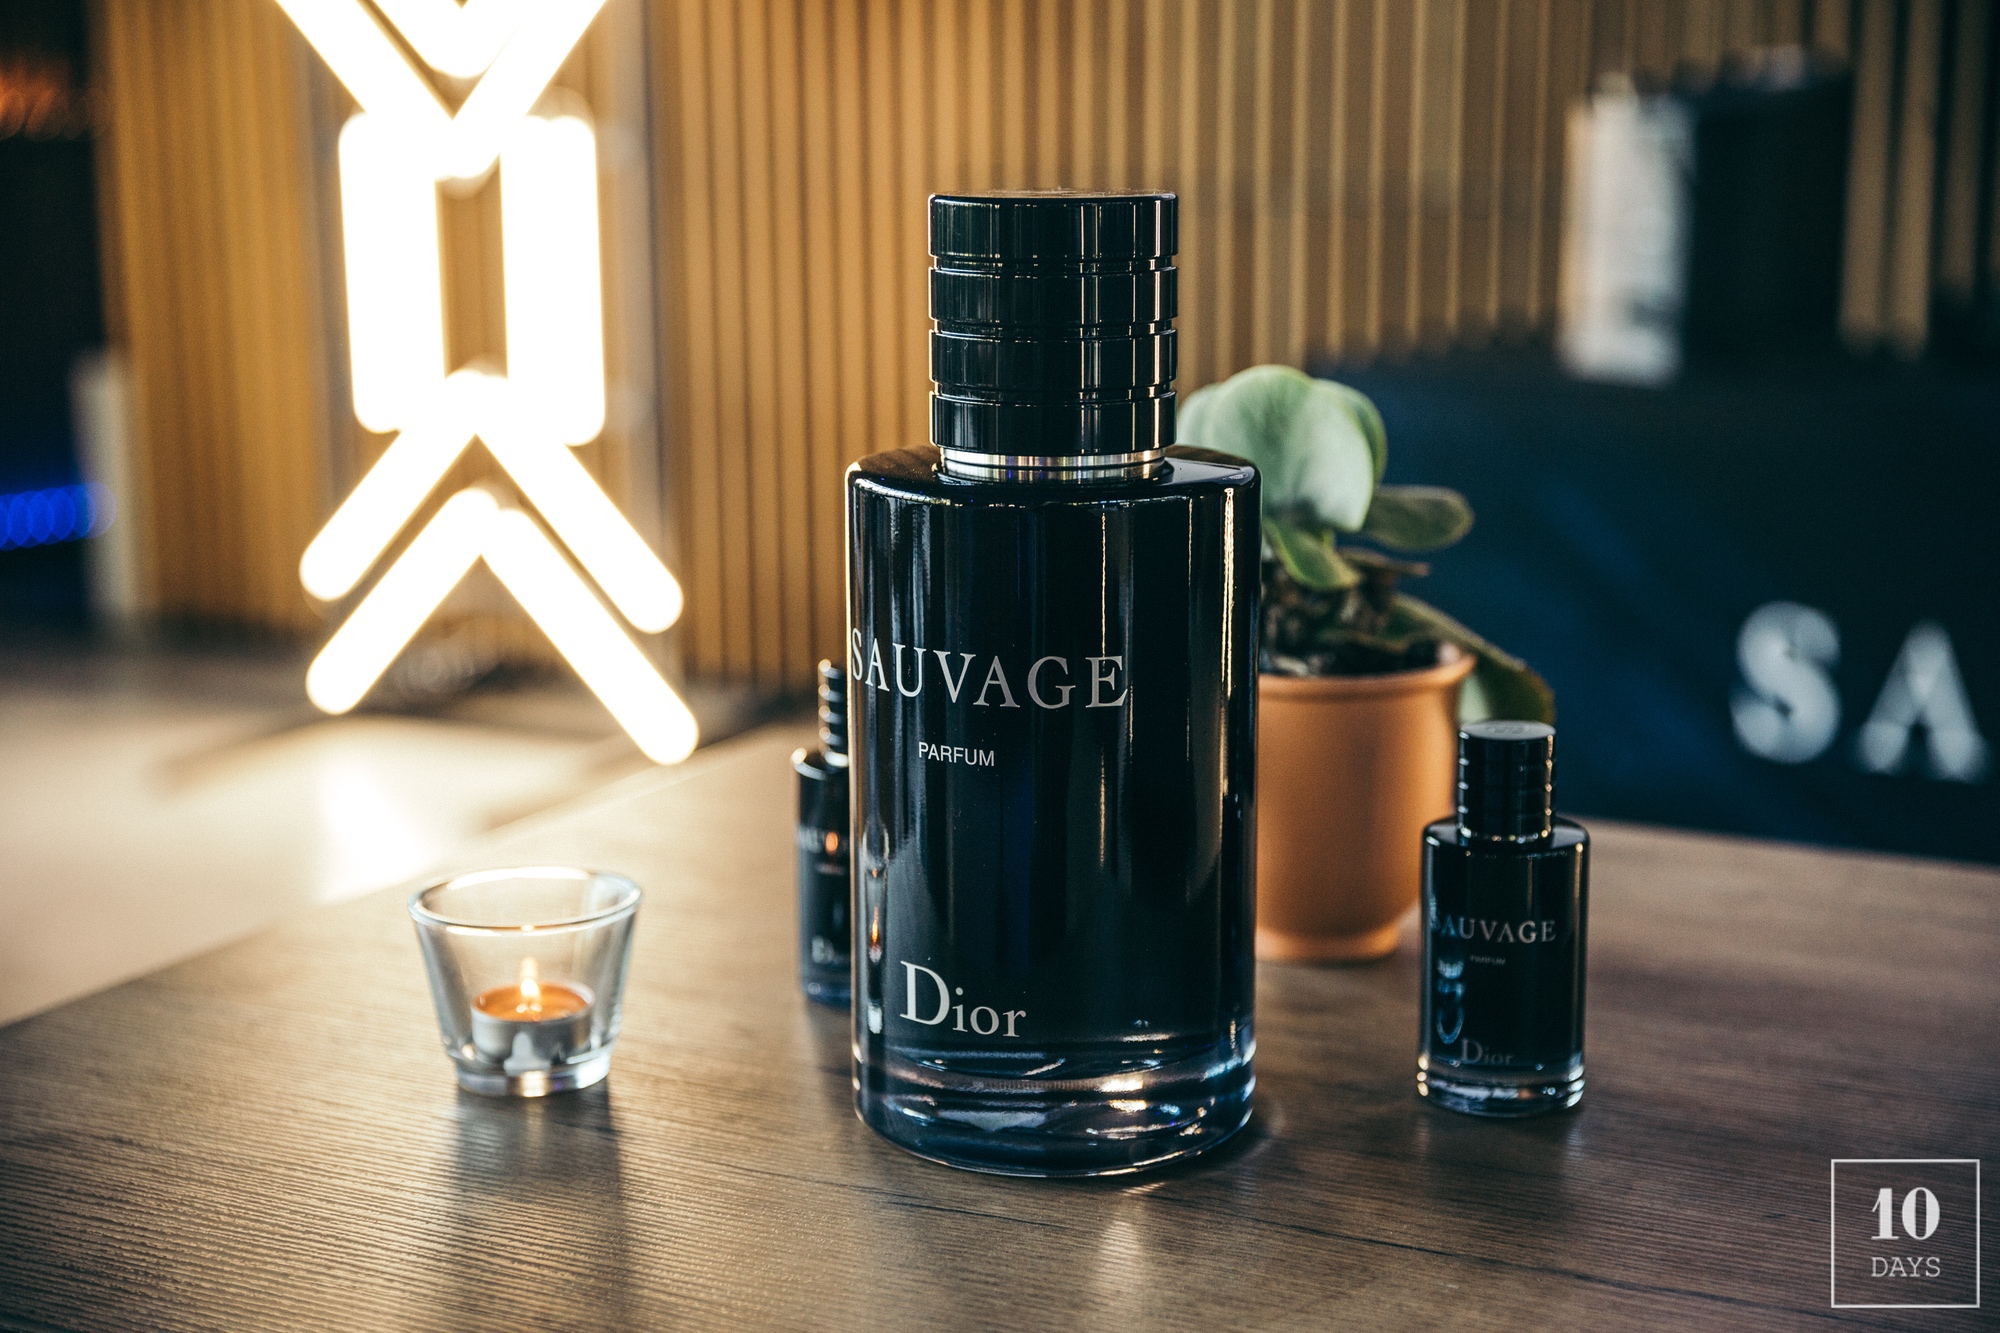 sauvage dior 2019